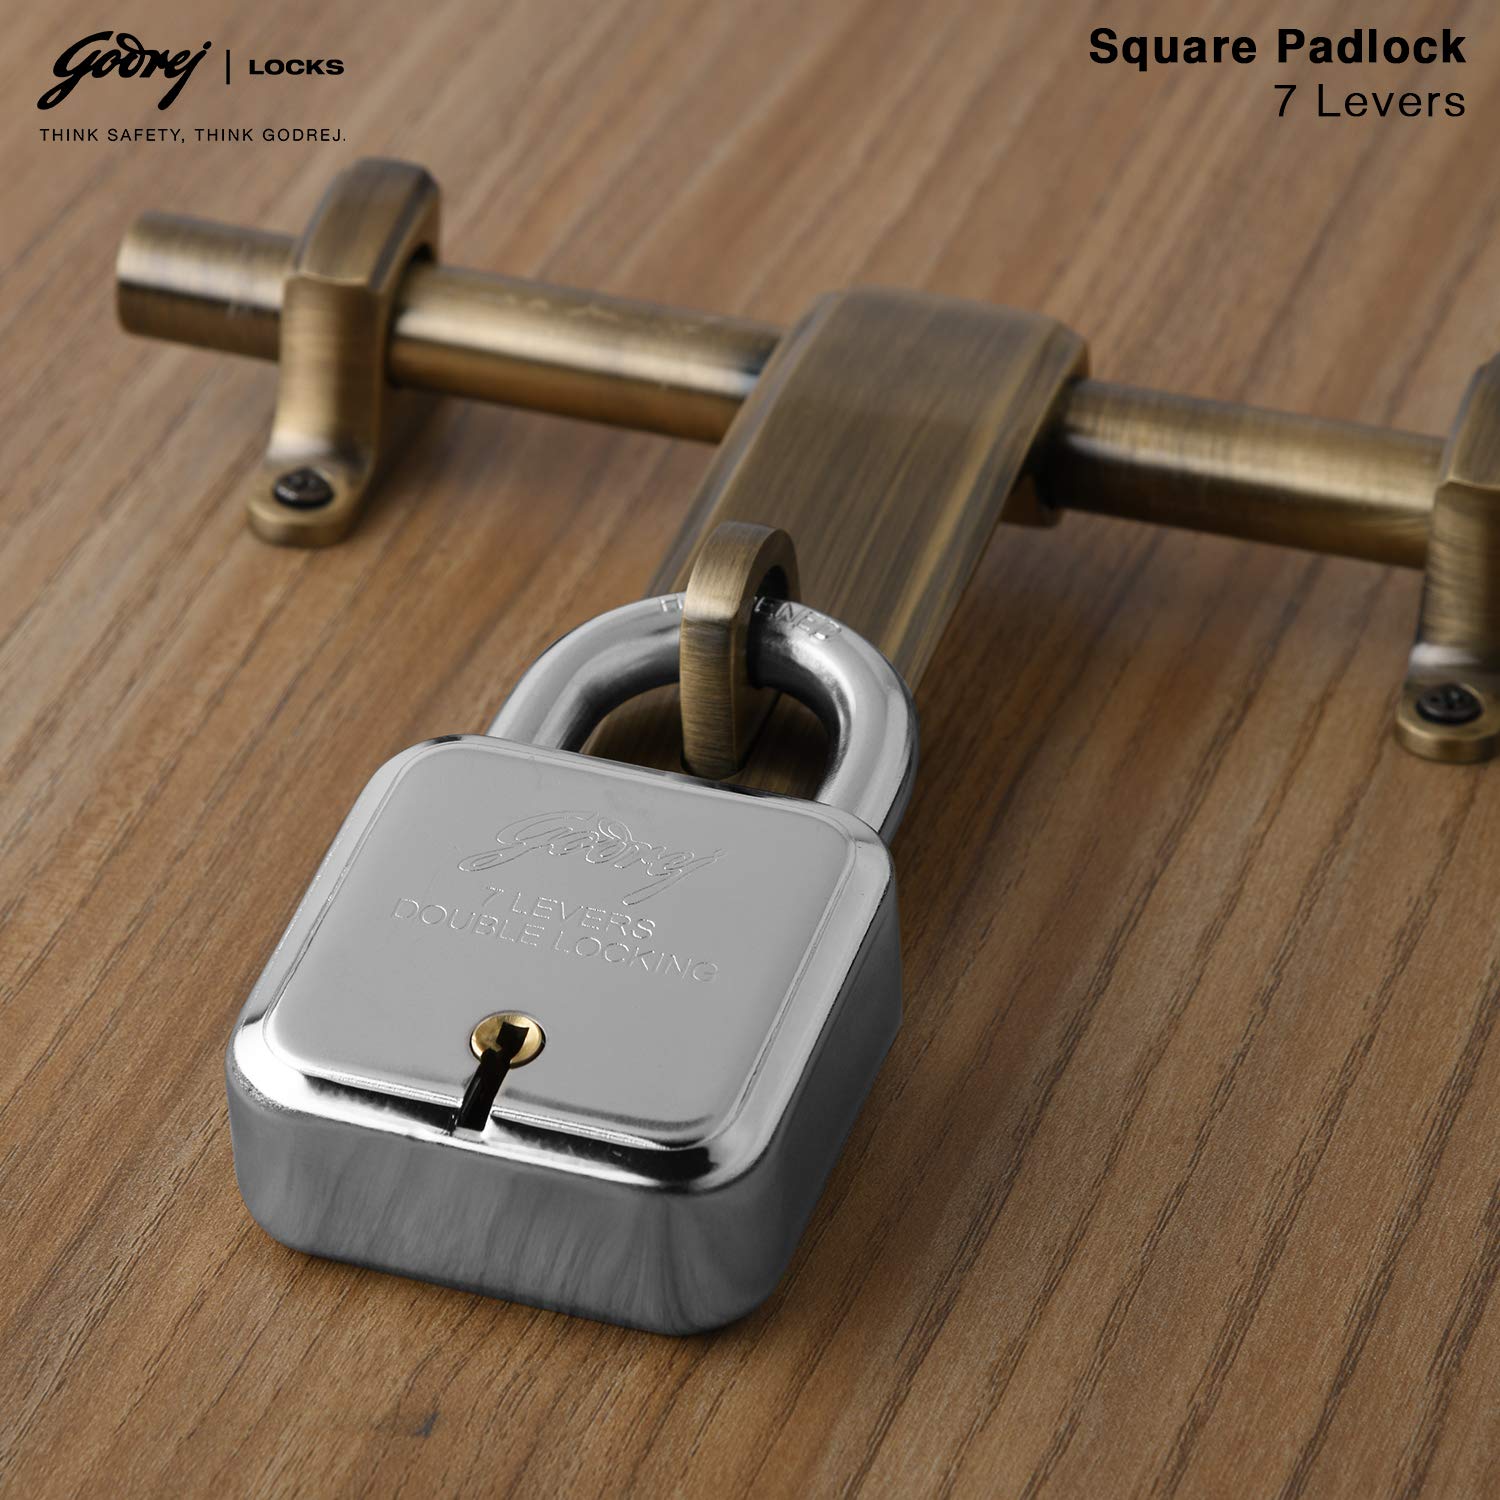 Godrej Locks I Square 7 levers 60 mm I 4 Keys I Padlock for Main Door I Gate Lock I for Tool Box, Shutters, Shops & Offices I Strong Hardended Corrosion Resistant Shackle I Steel Finish (Pack of 2)